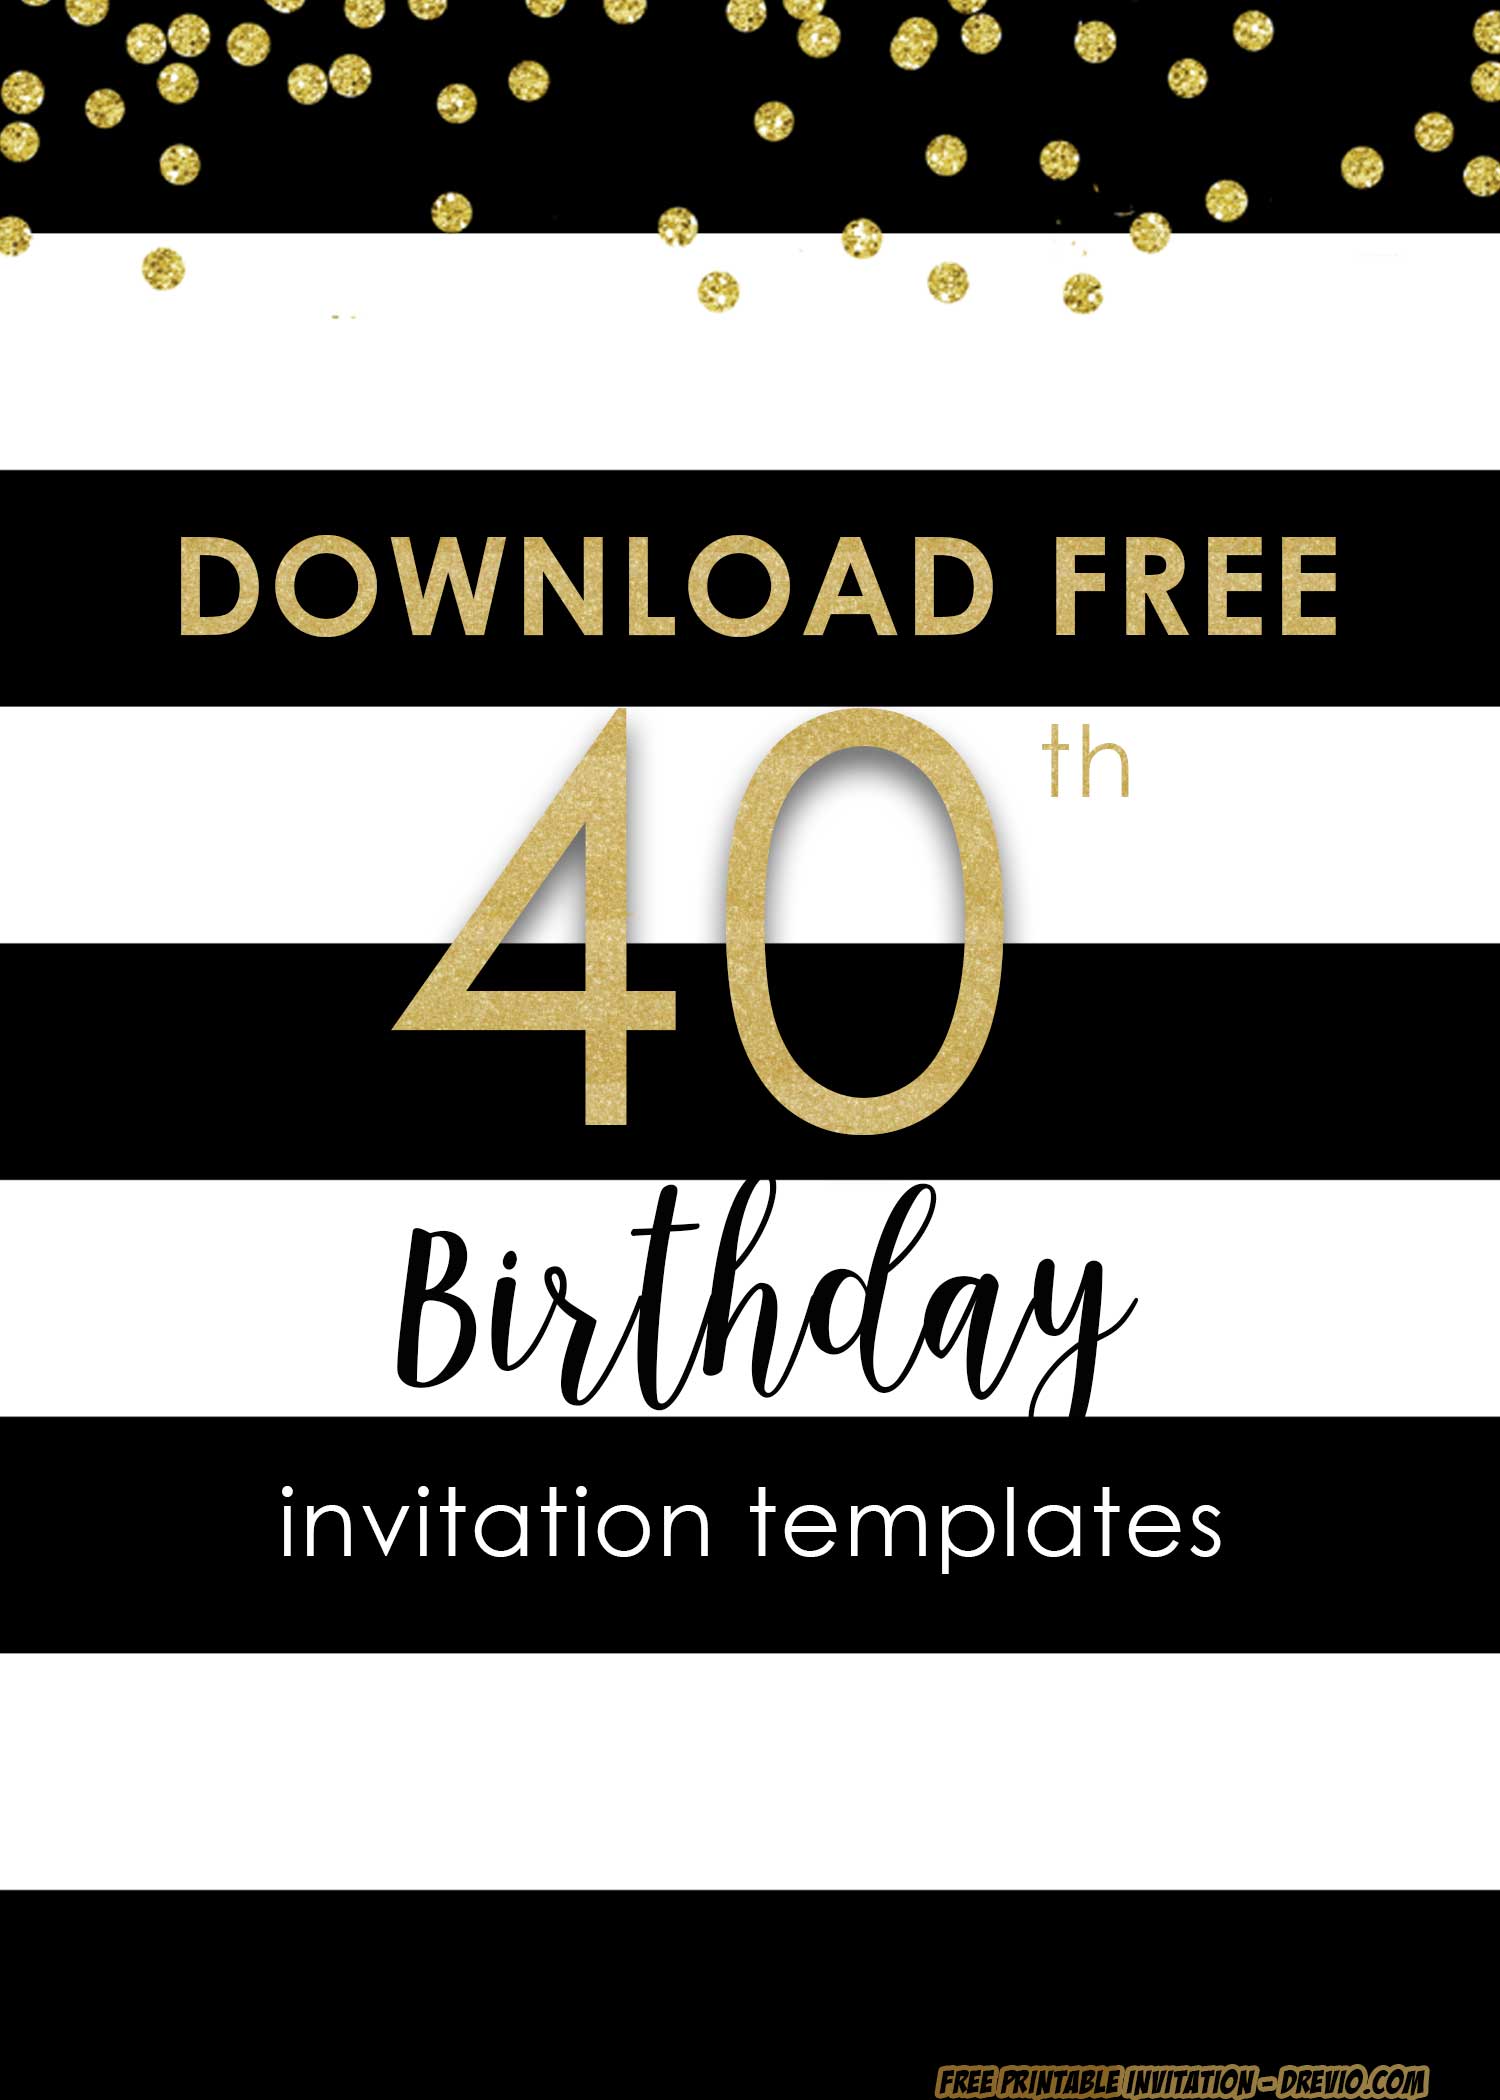 Lanterns Garland 40th birthday party Instant download Fortieth editable birthday Invitation Celebration Forty b-day printable invite